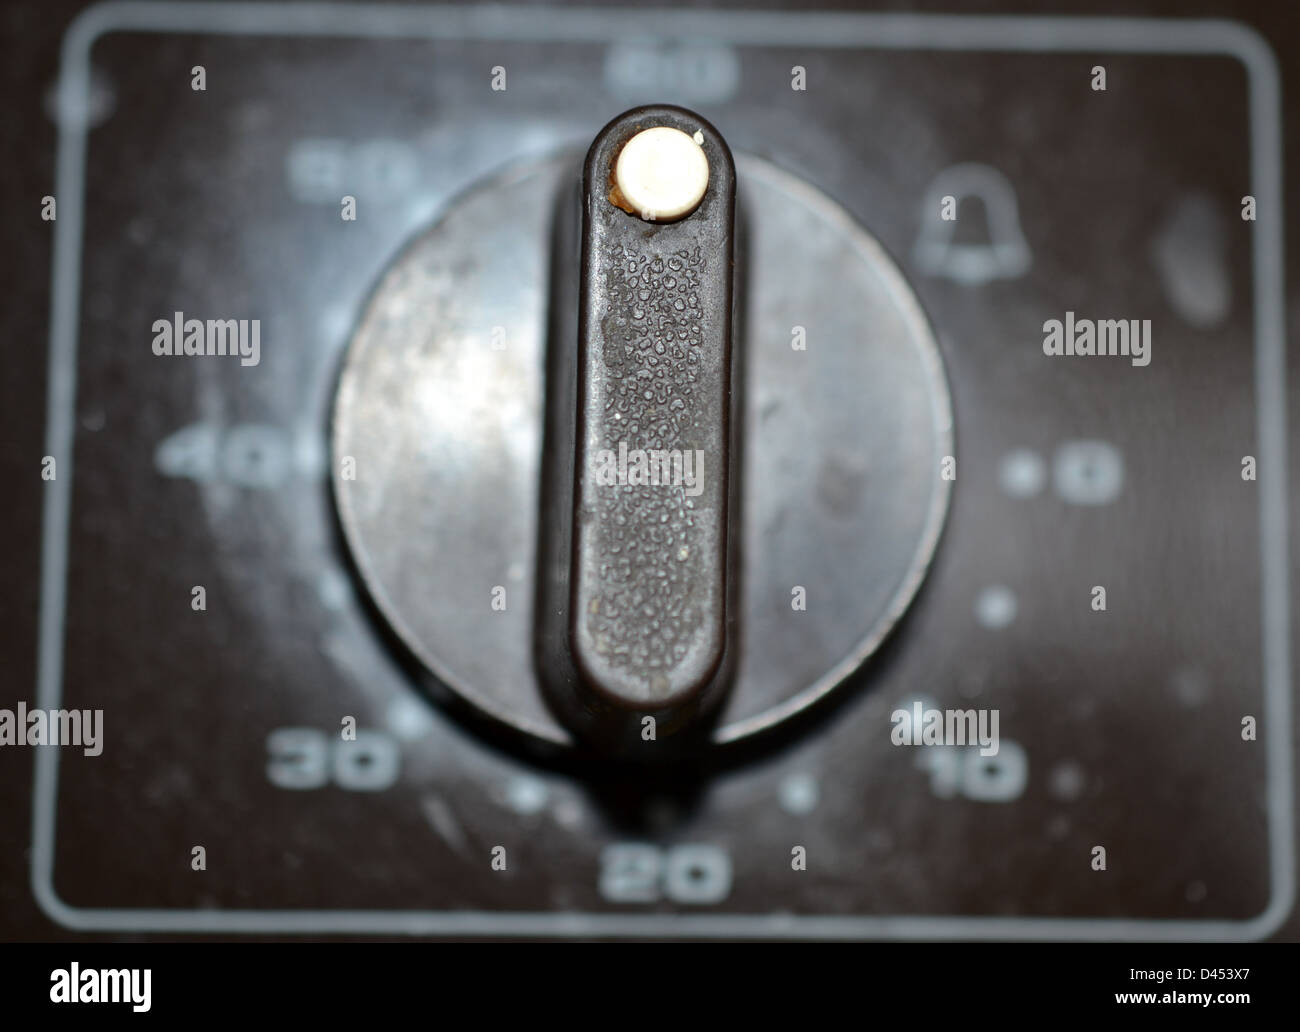 https://c8.alamy.com/comp/D453X7/close-up-of-oven-timer-dial-D453X7.jpg